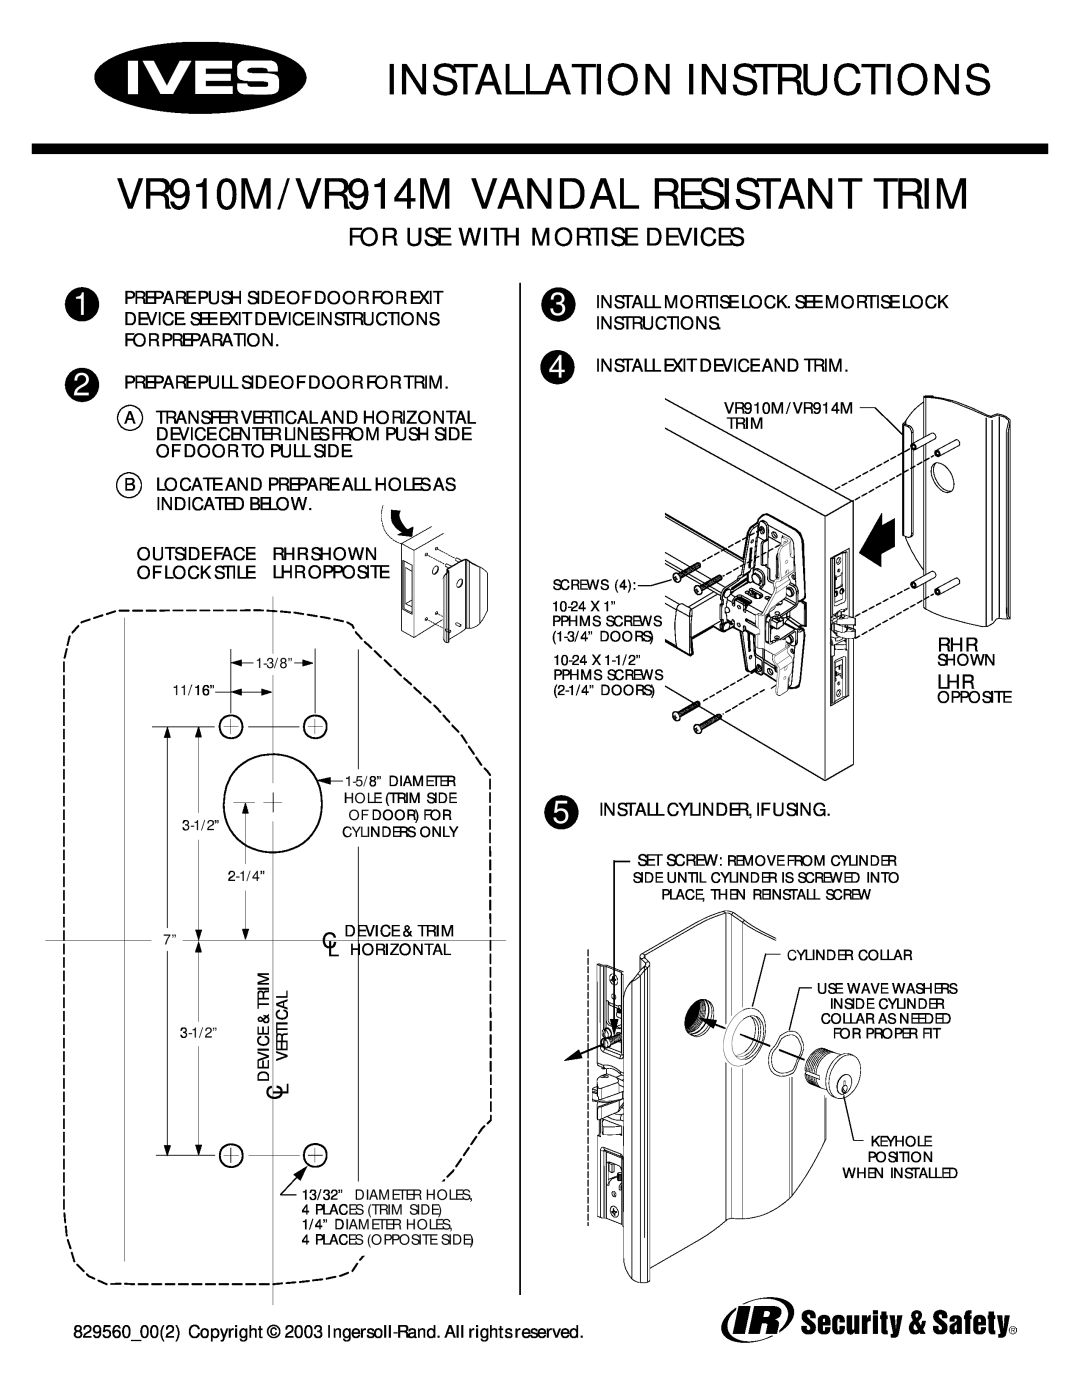 Ives installation instructions Installation Instructions, VR910M/VR914M VANDAL RESISTANT TRIM, Outside Face, Rhr Shown 